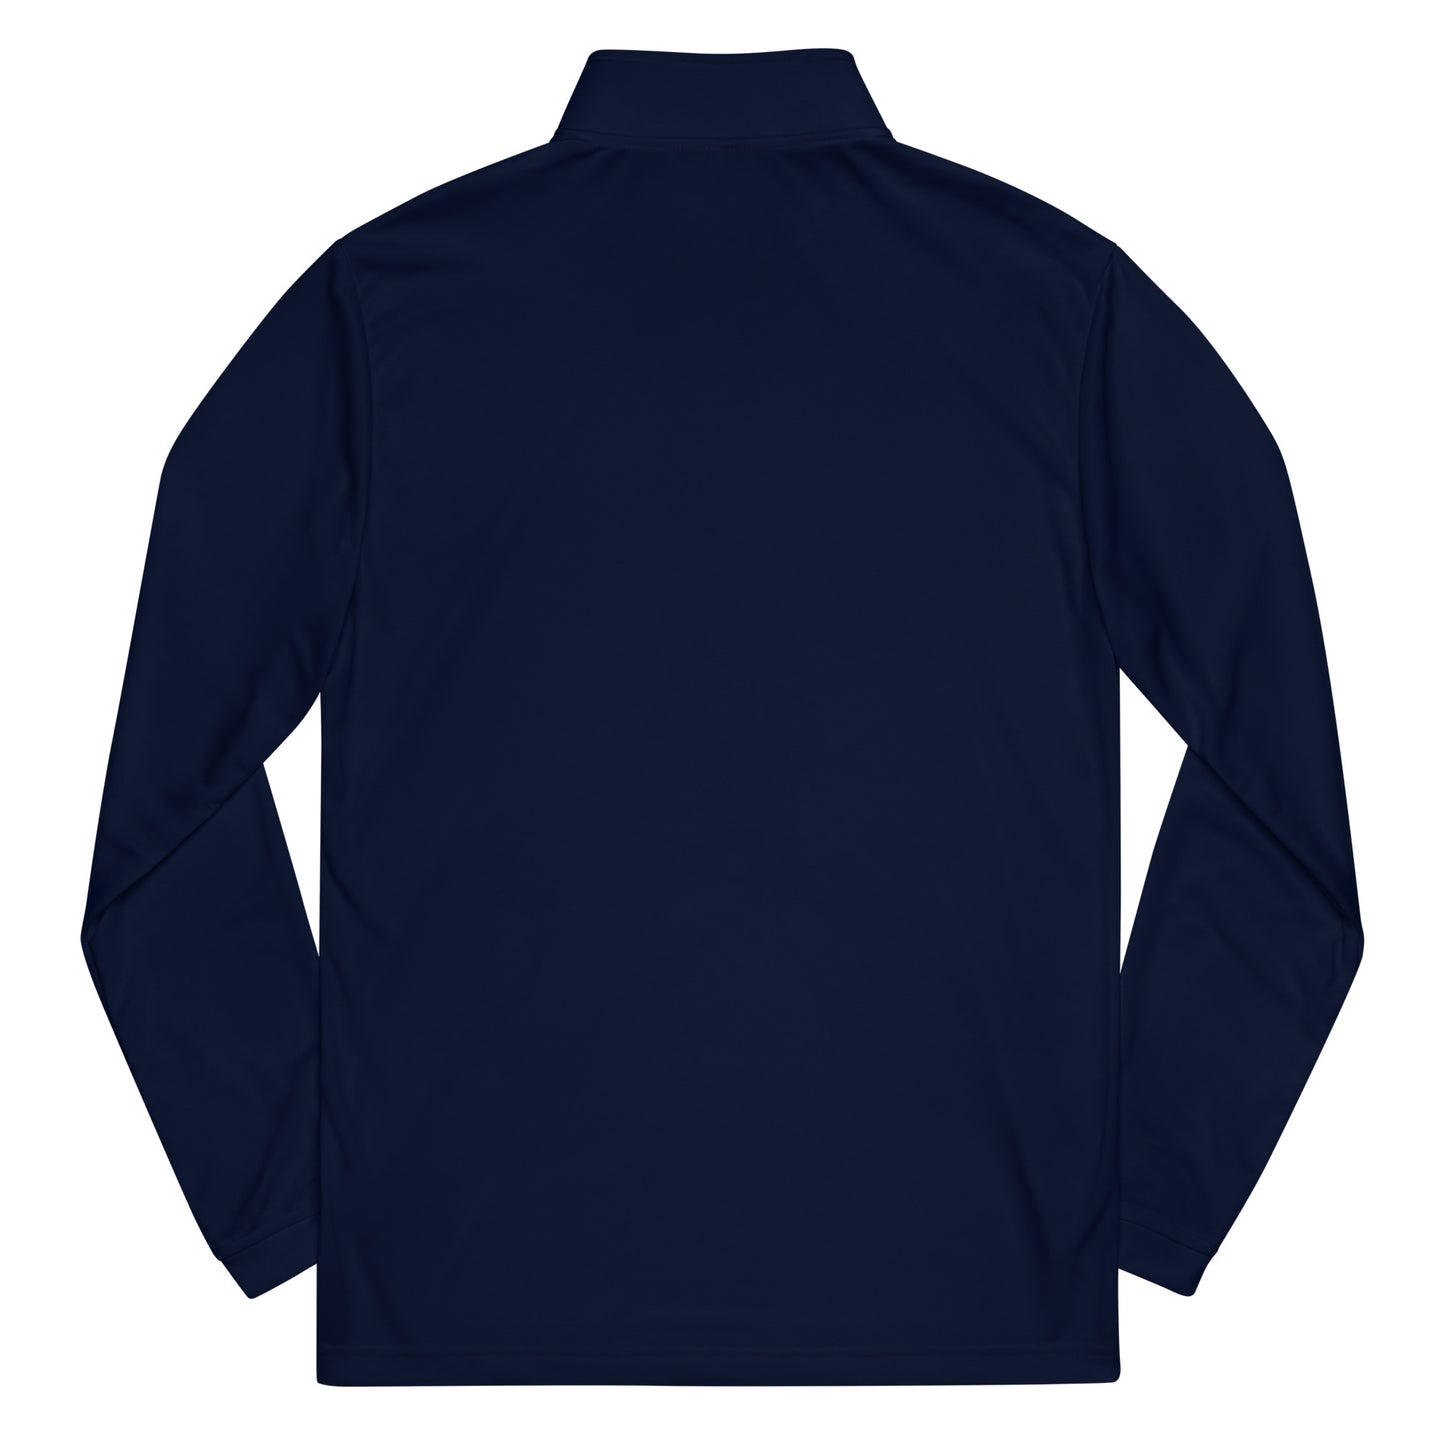 CBCF Quarter zip pullover